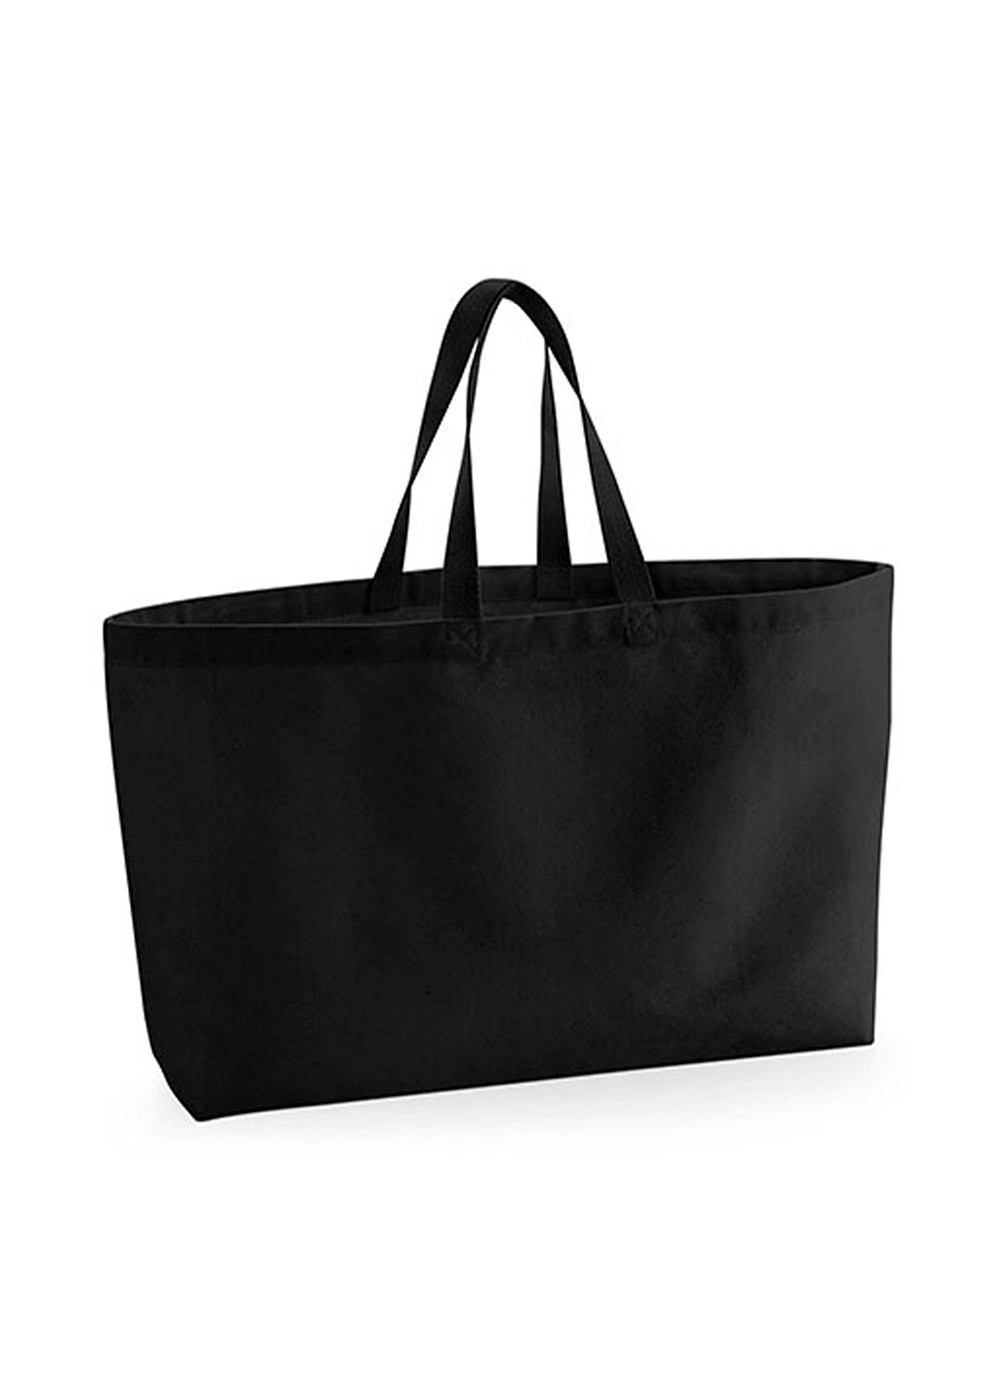 Oversize bag 56x41x16 cm Black